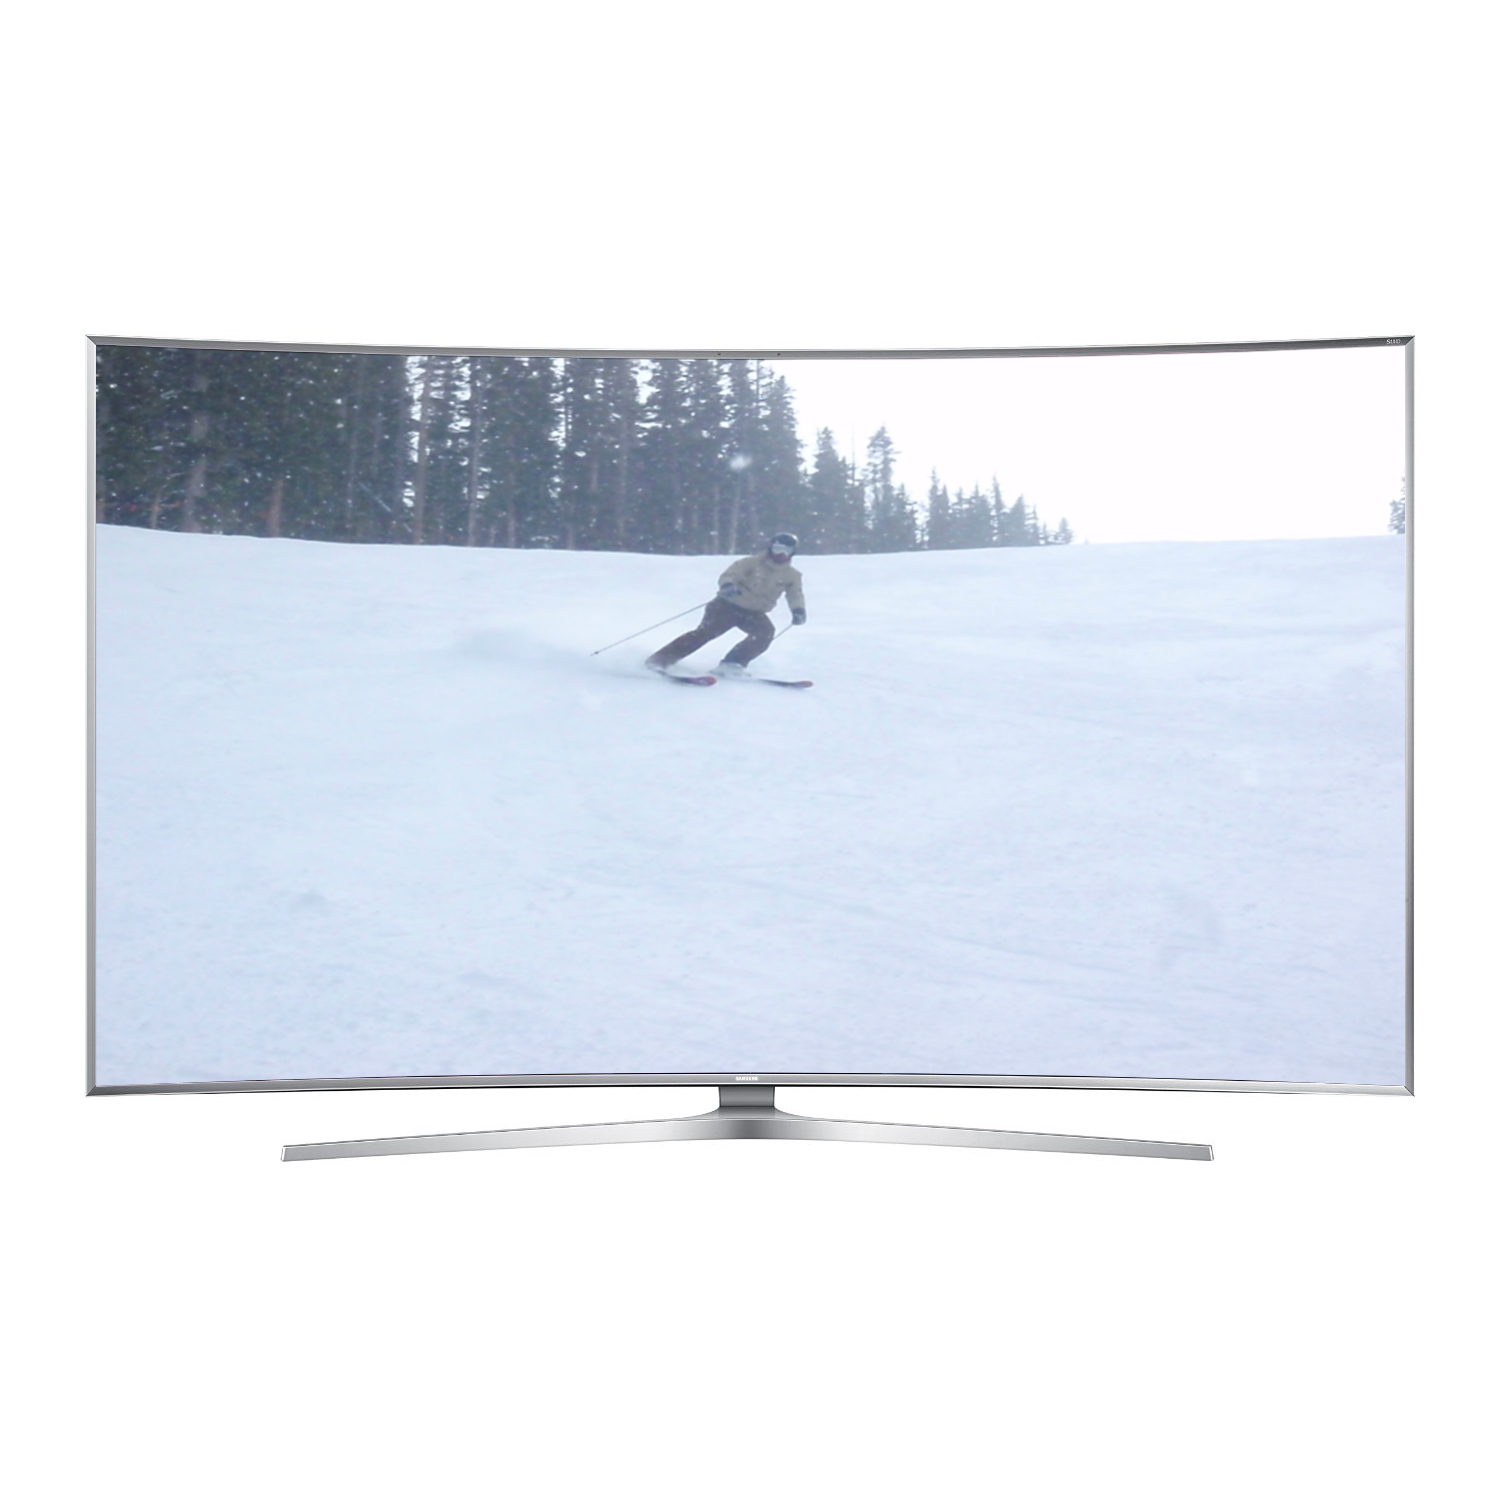 Samsung Refurbished 55" Class 4K Ultra HD Curved LED Smart SUHD TV - UN55JS9000